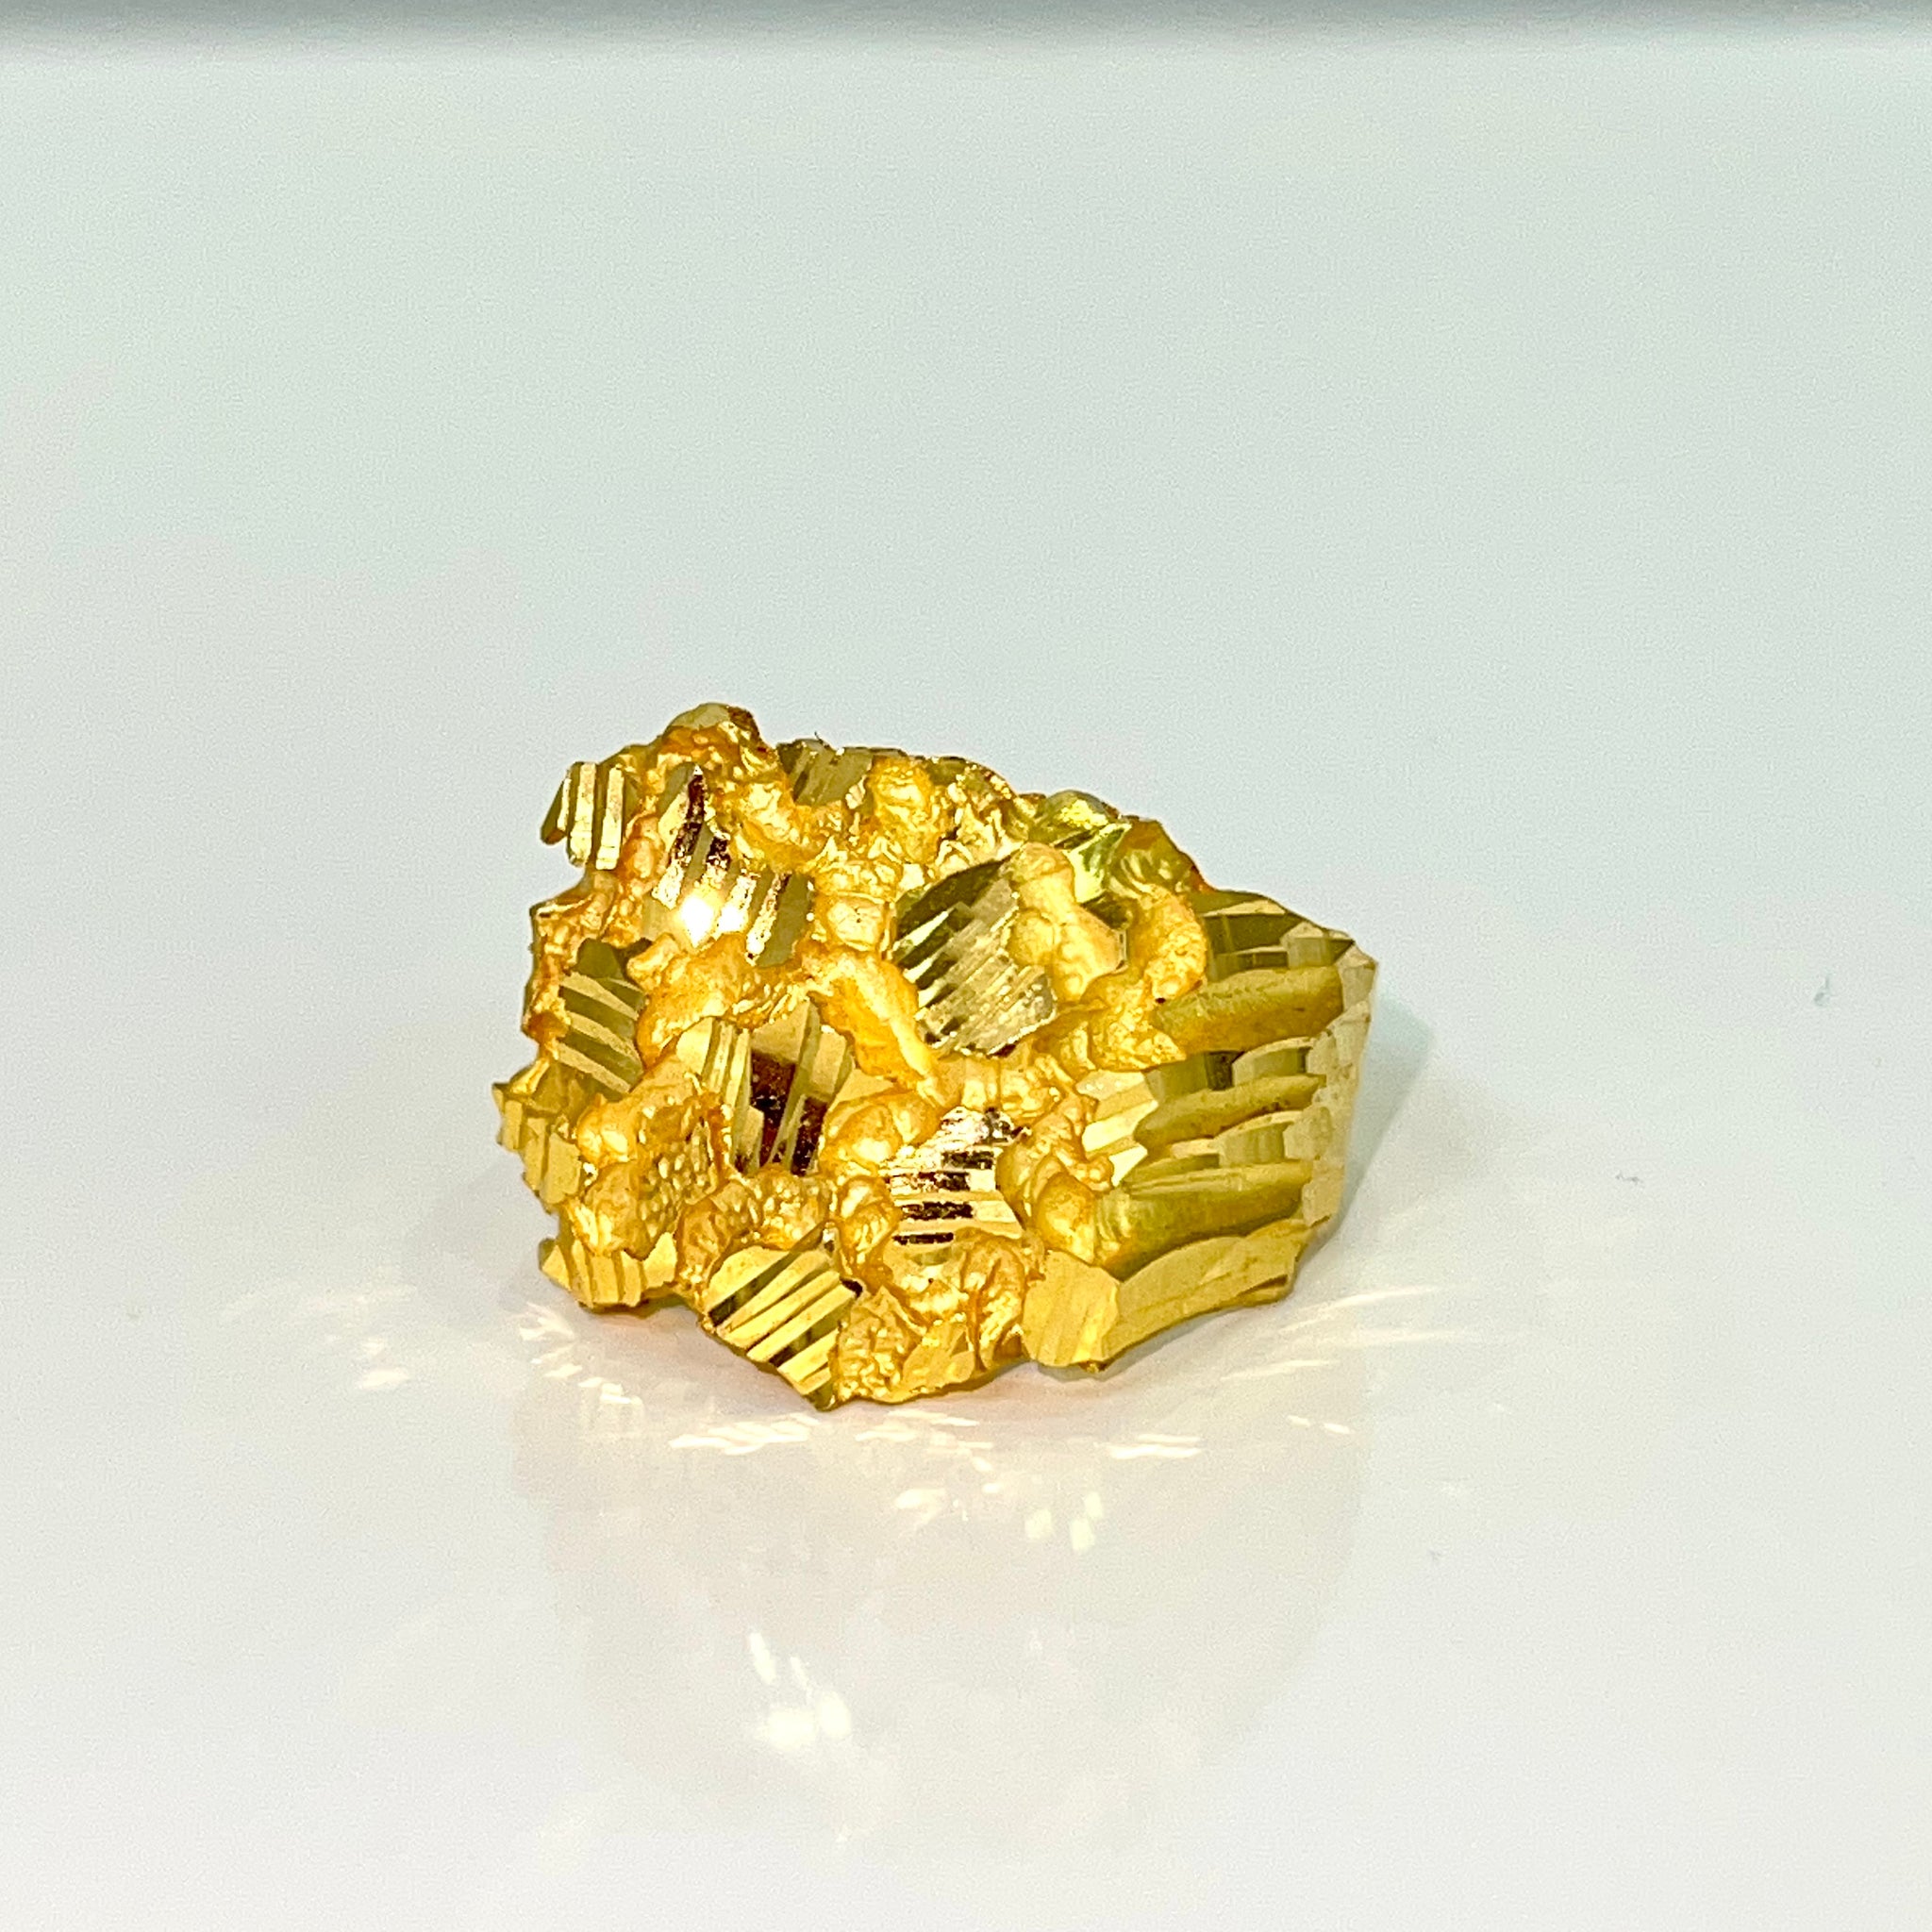 Piet Piet Ring - Big - 18 carat gold